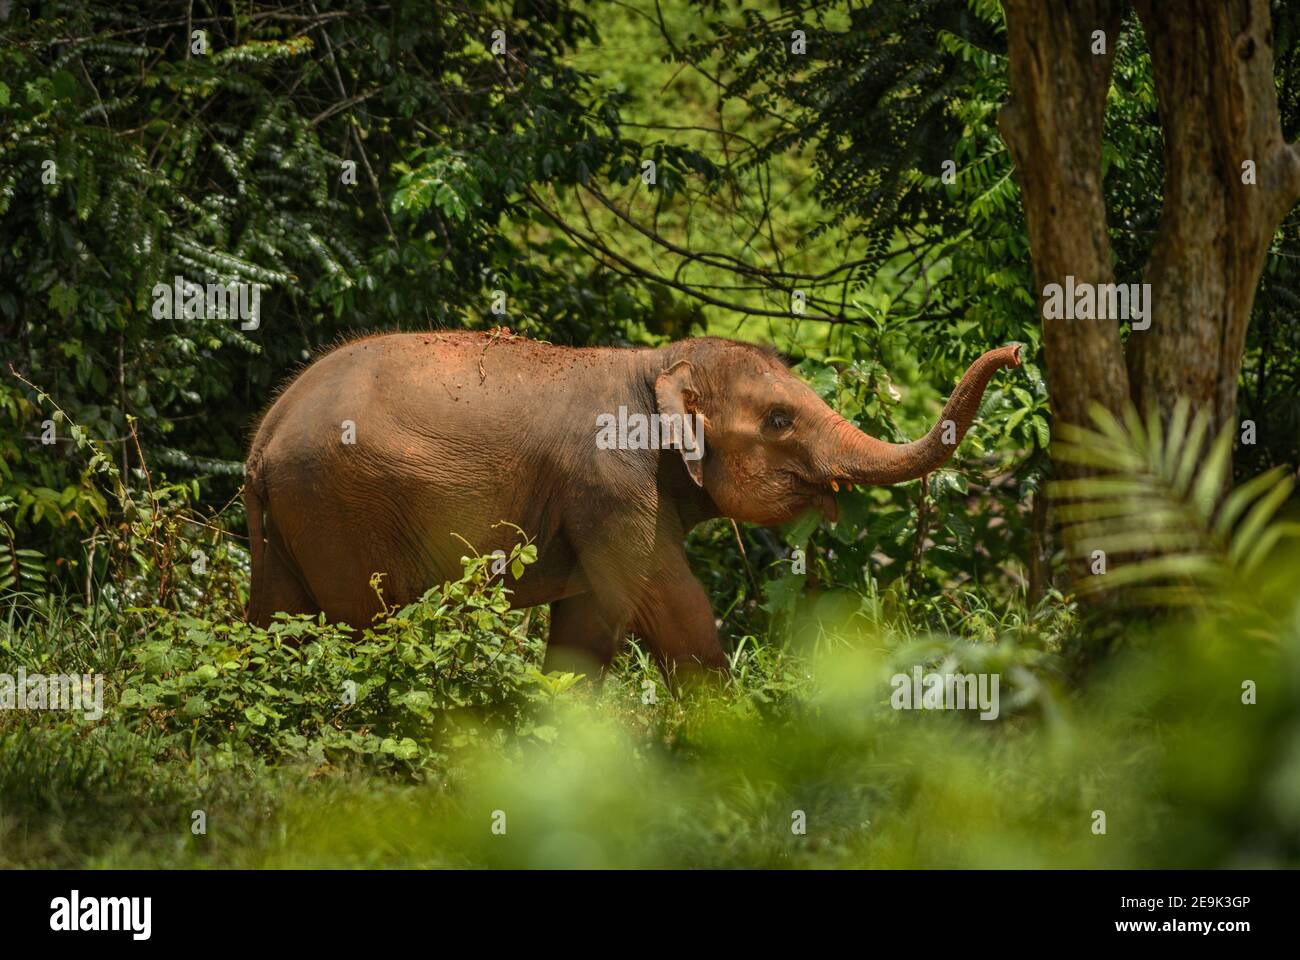 Asiatischer Elefant - Elephas maximus, junger asiatischer Elefant, ikonisches Säugetier aus Asien, Thailand. Stockfoto